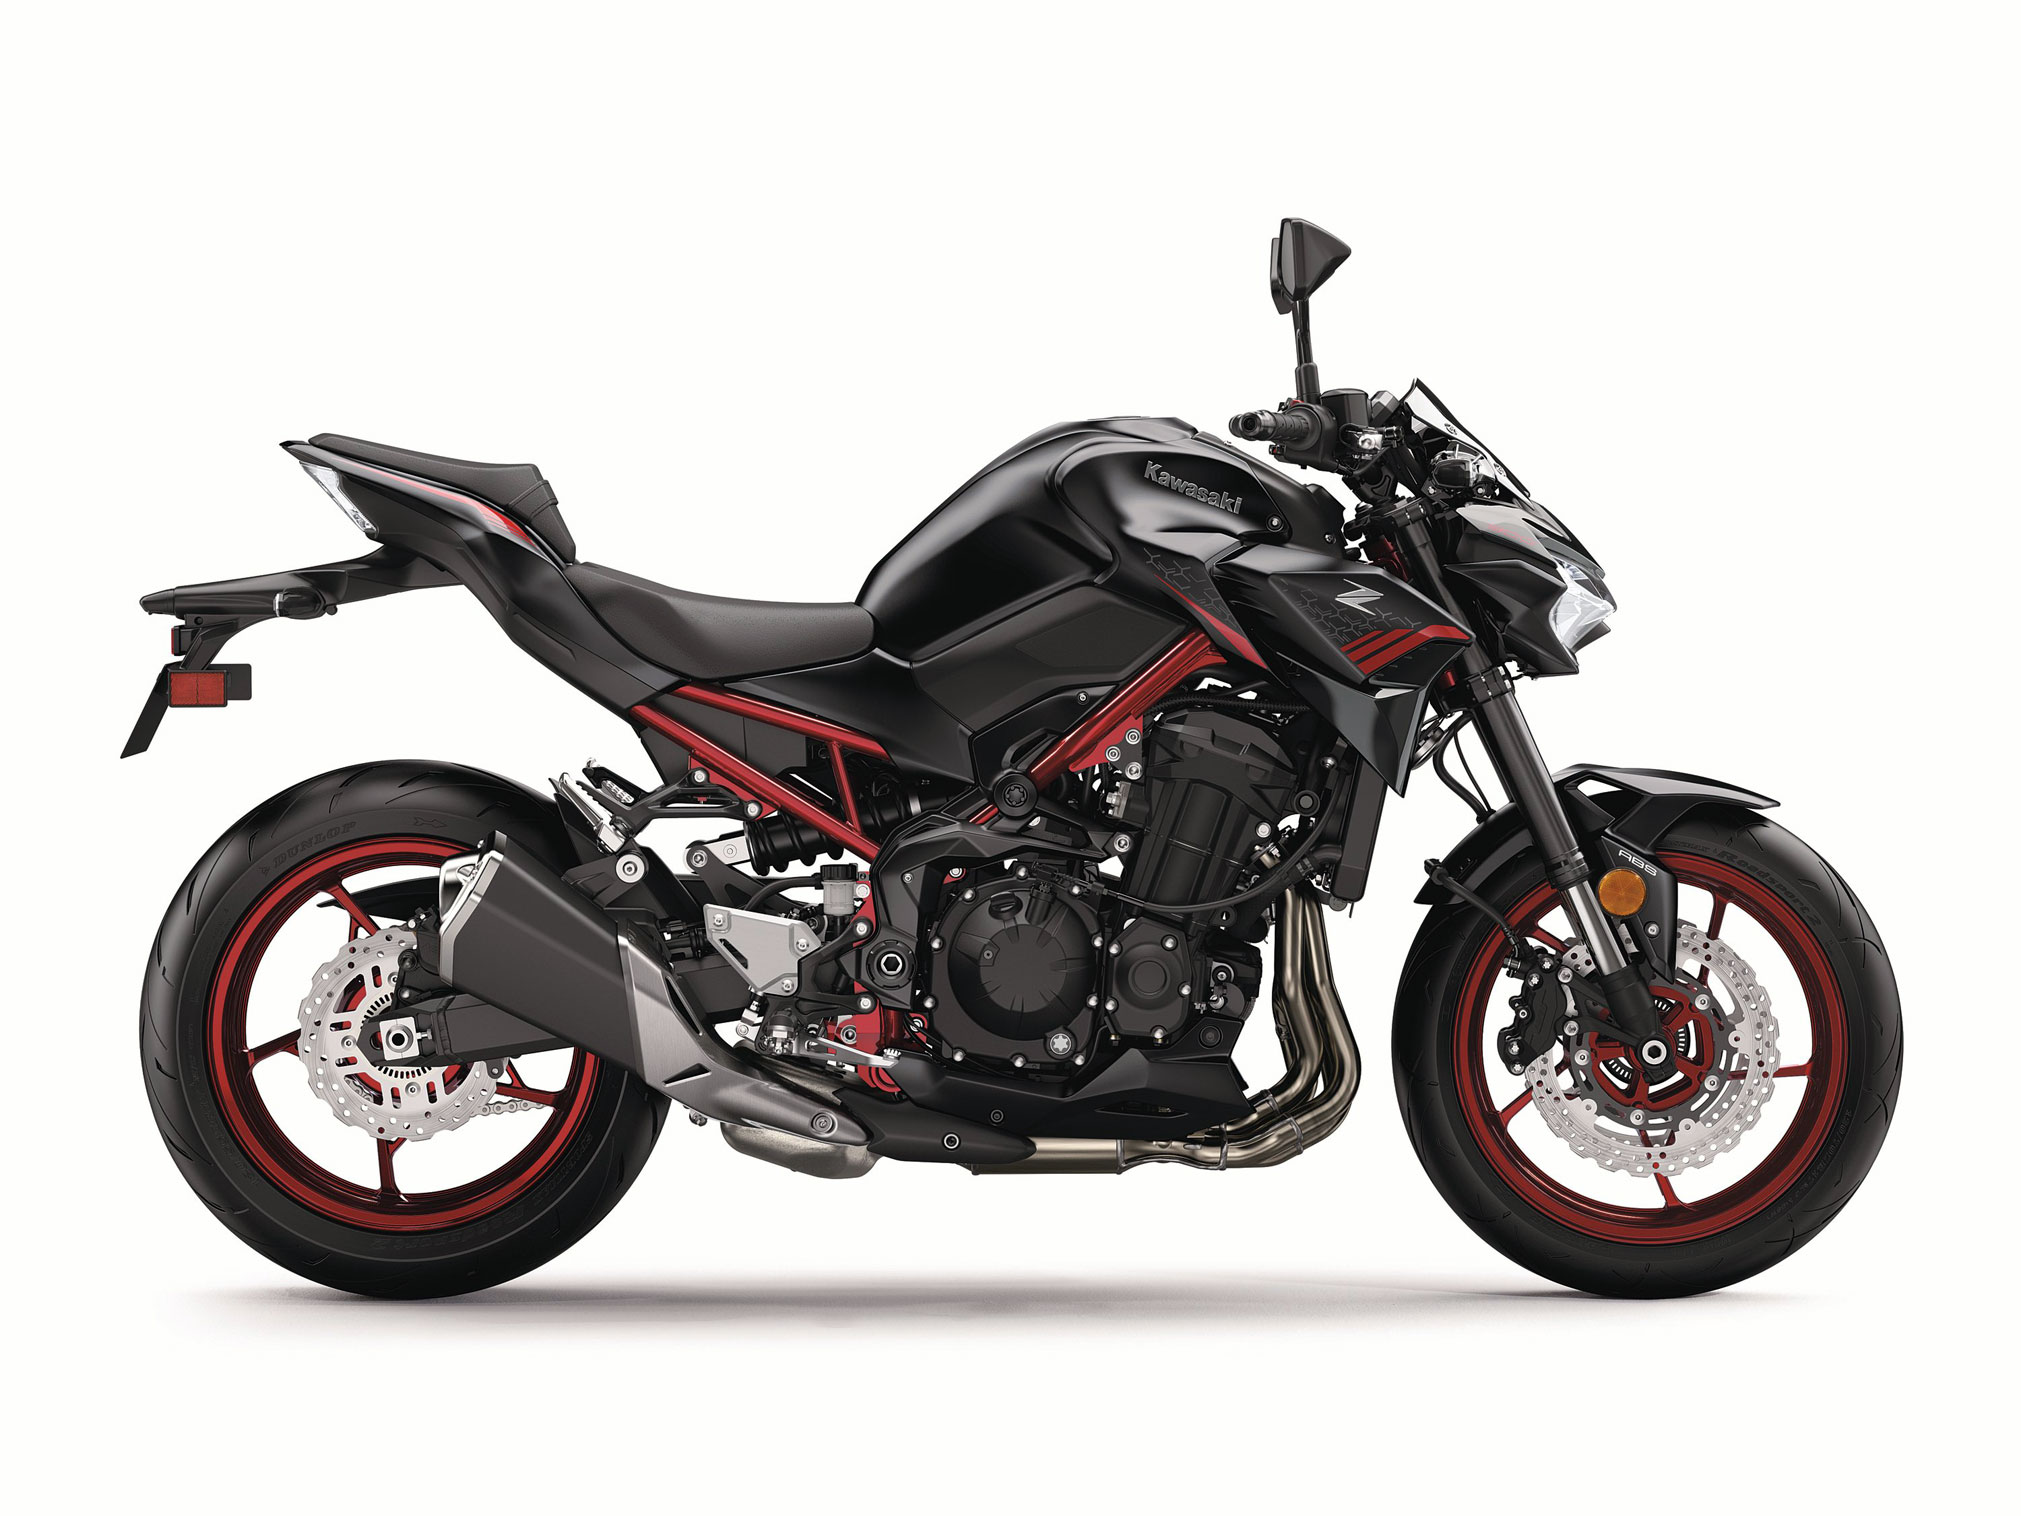 2021 Kawasaki Z900 Guide • Total Motorcycle